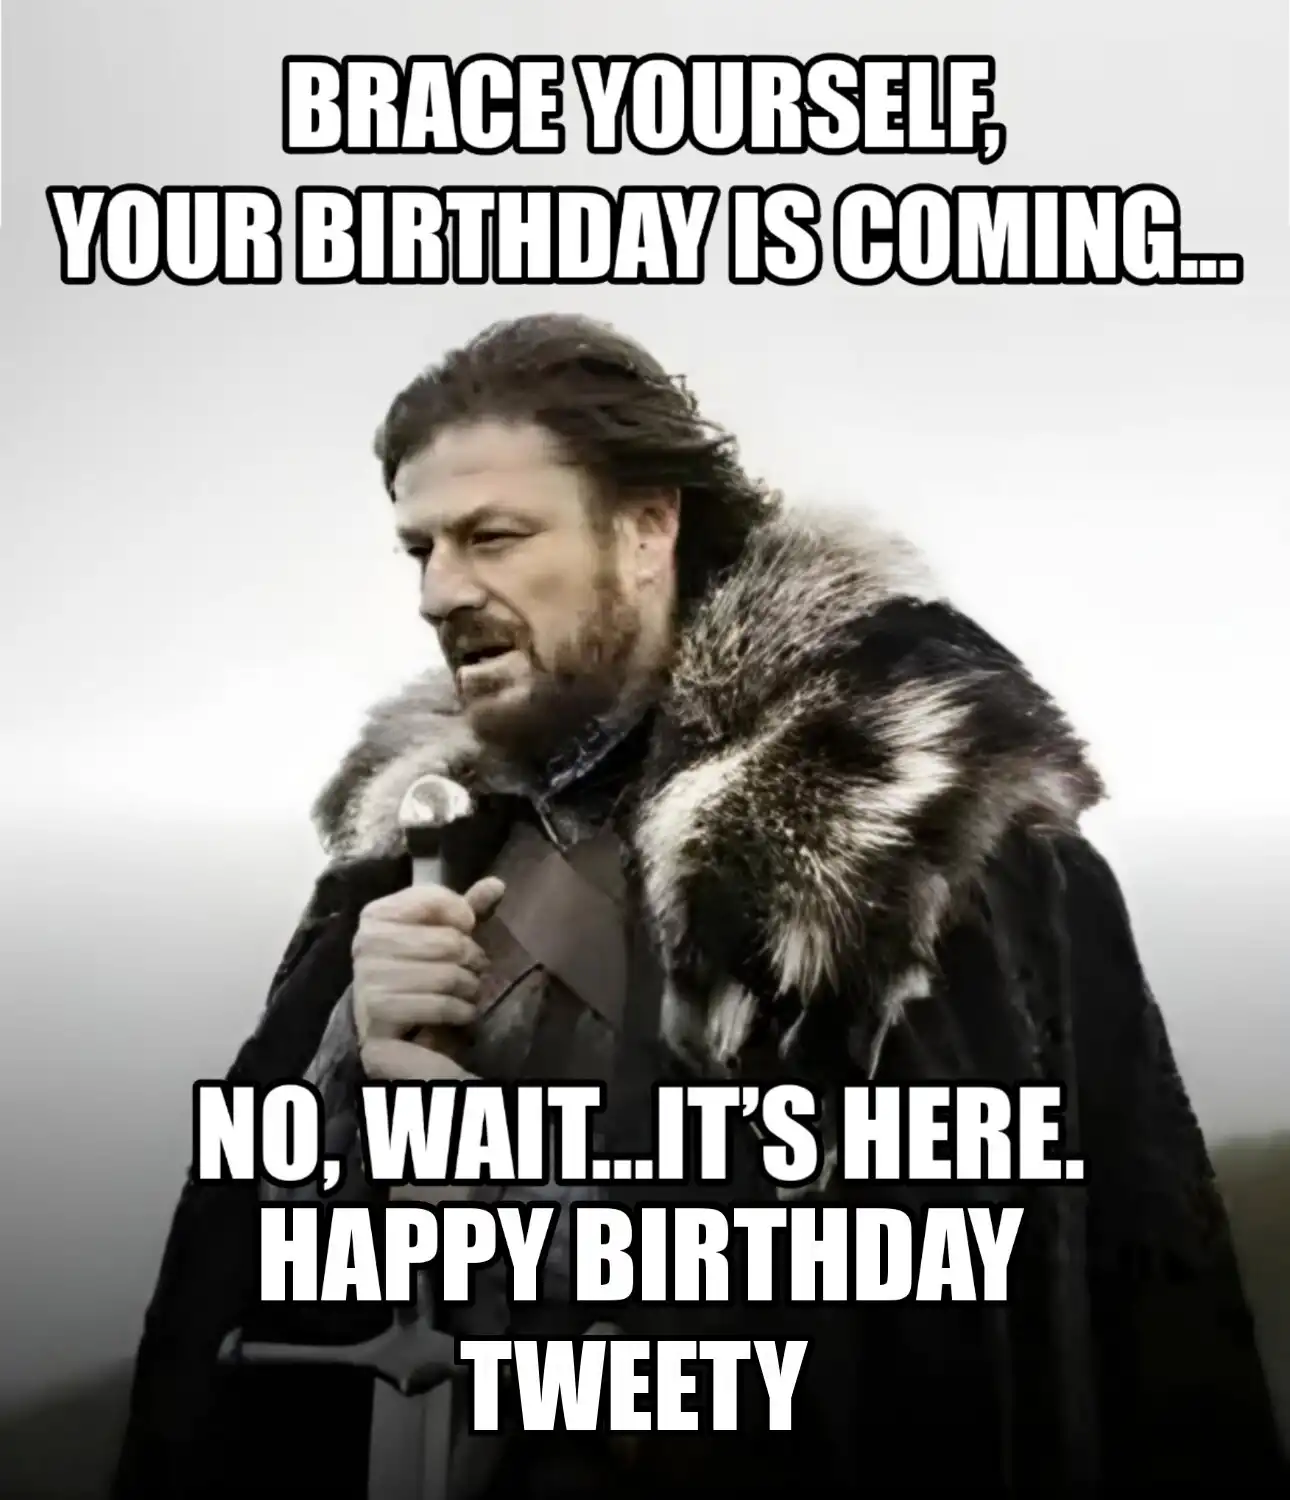 Happy Birthday Tweety Brace Yourself Your Birthday Is Coming Meme